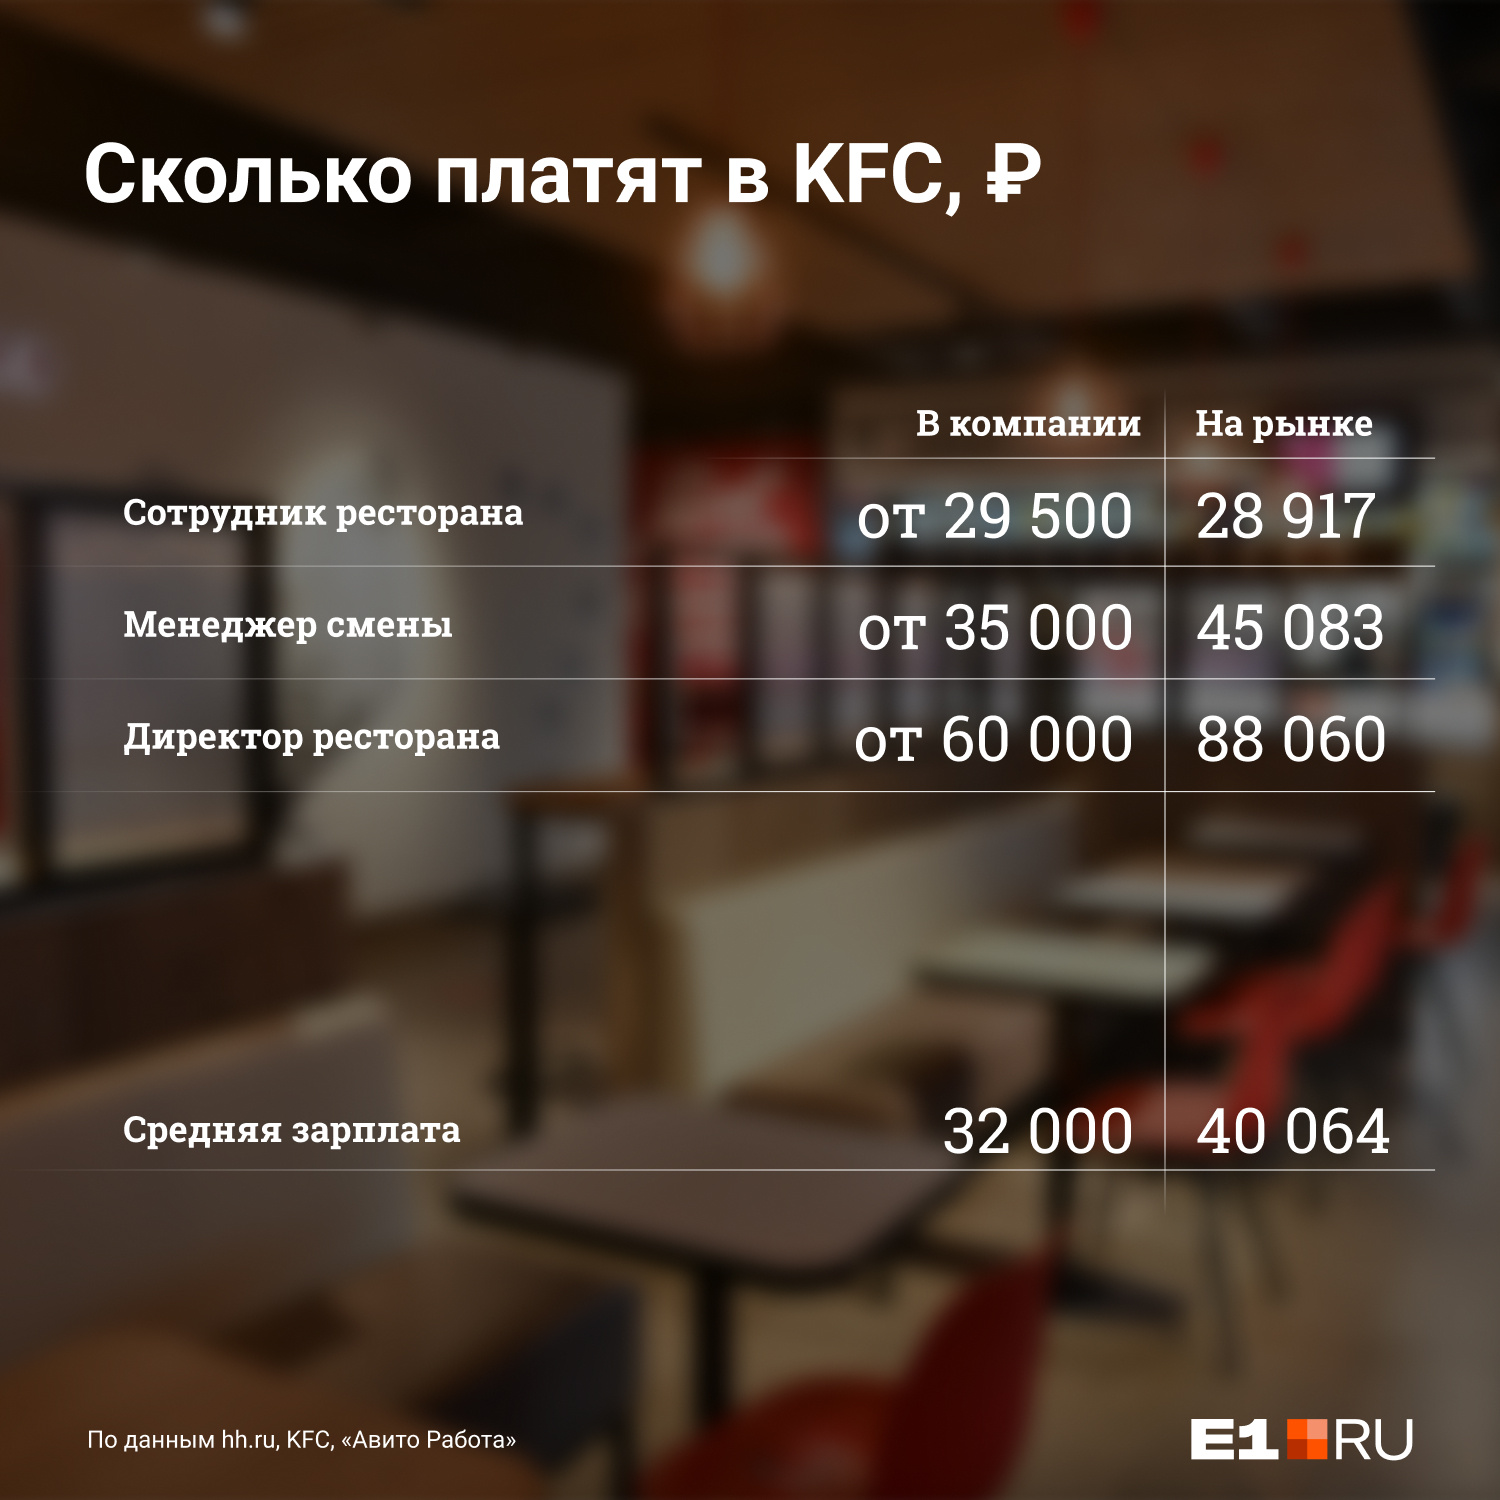 KFC — далеко не самый щедрый работодатель на рынке фастфуда